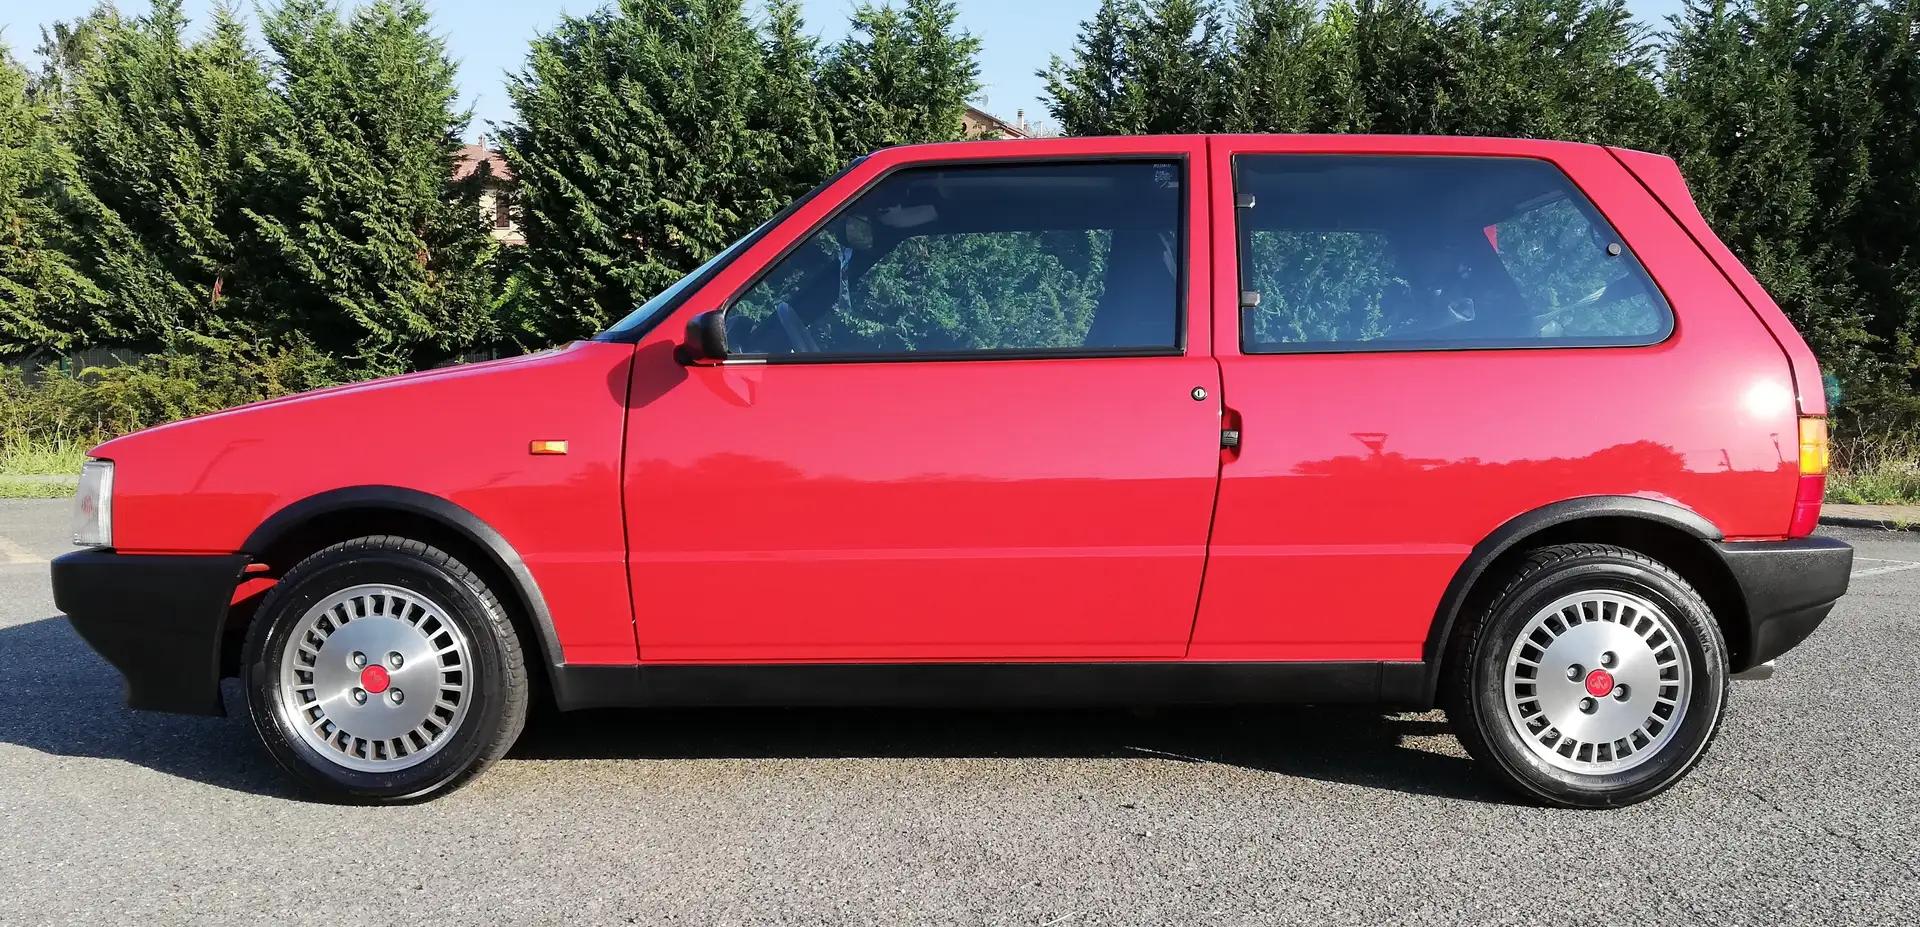 Fiat Uno Turbo ie - 2